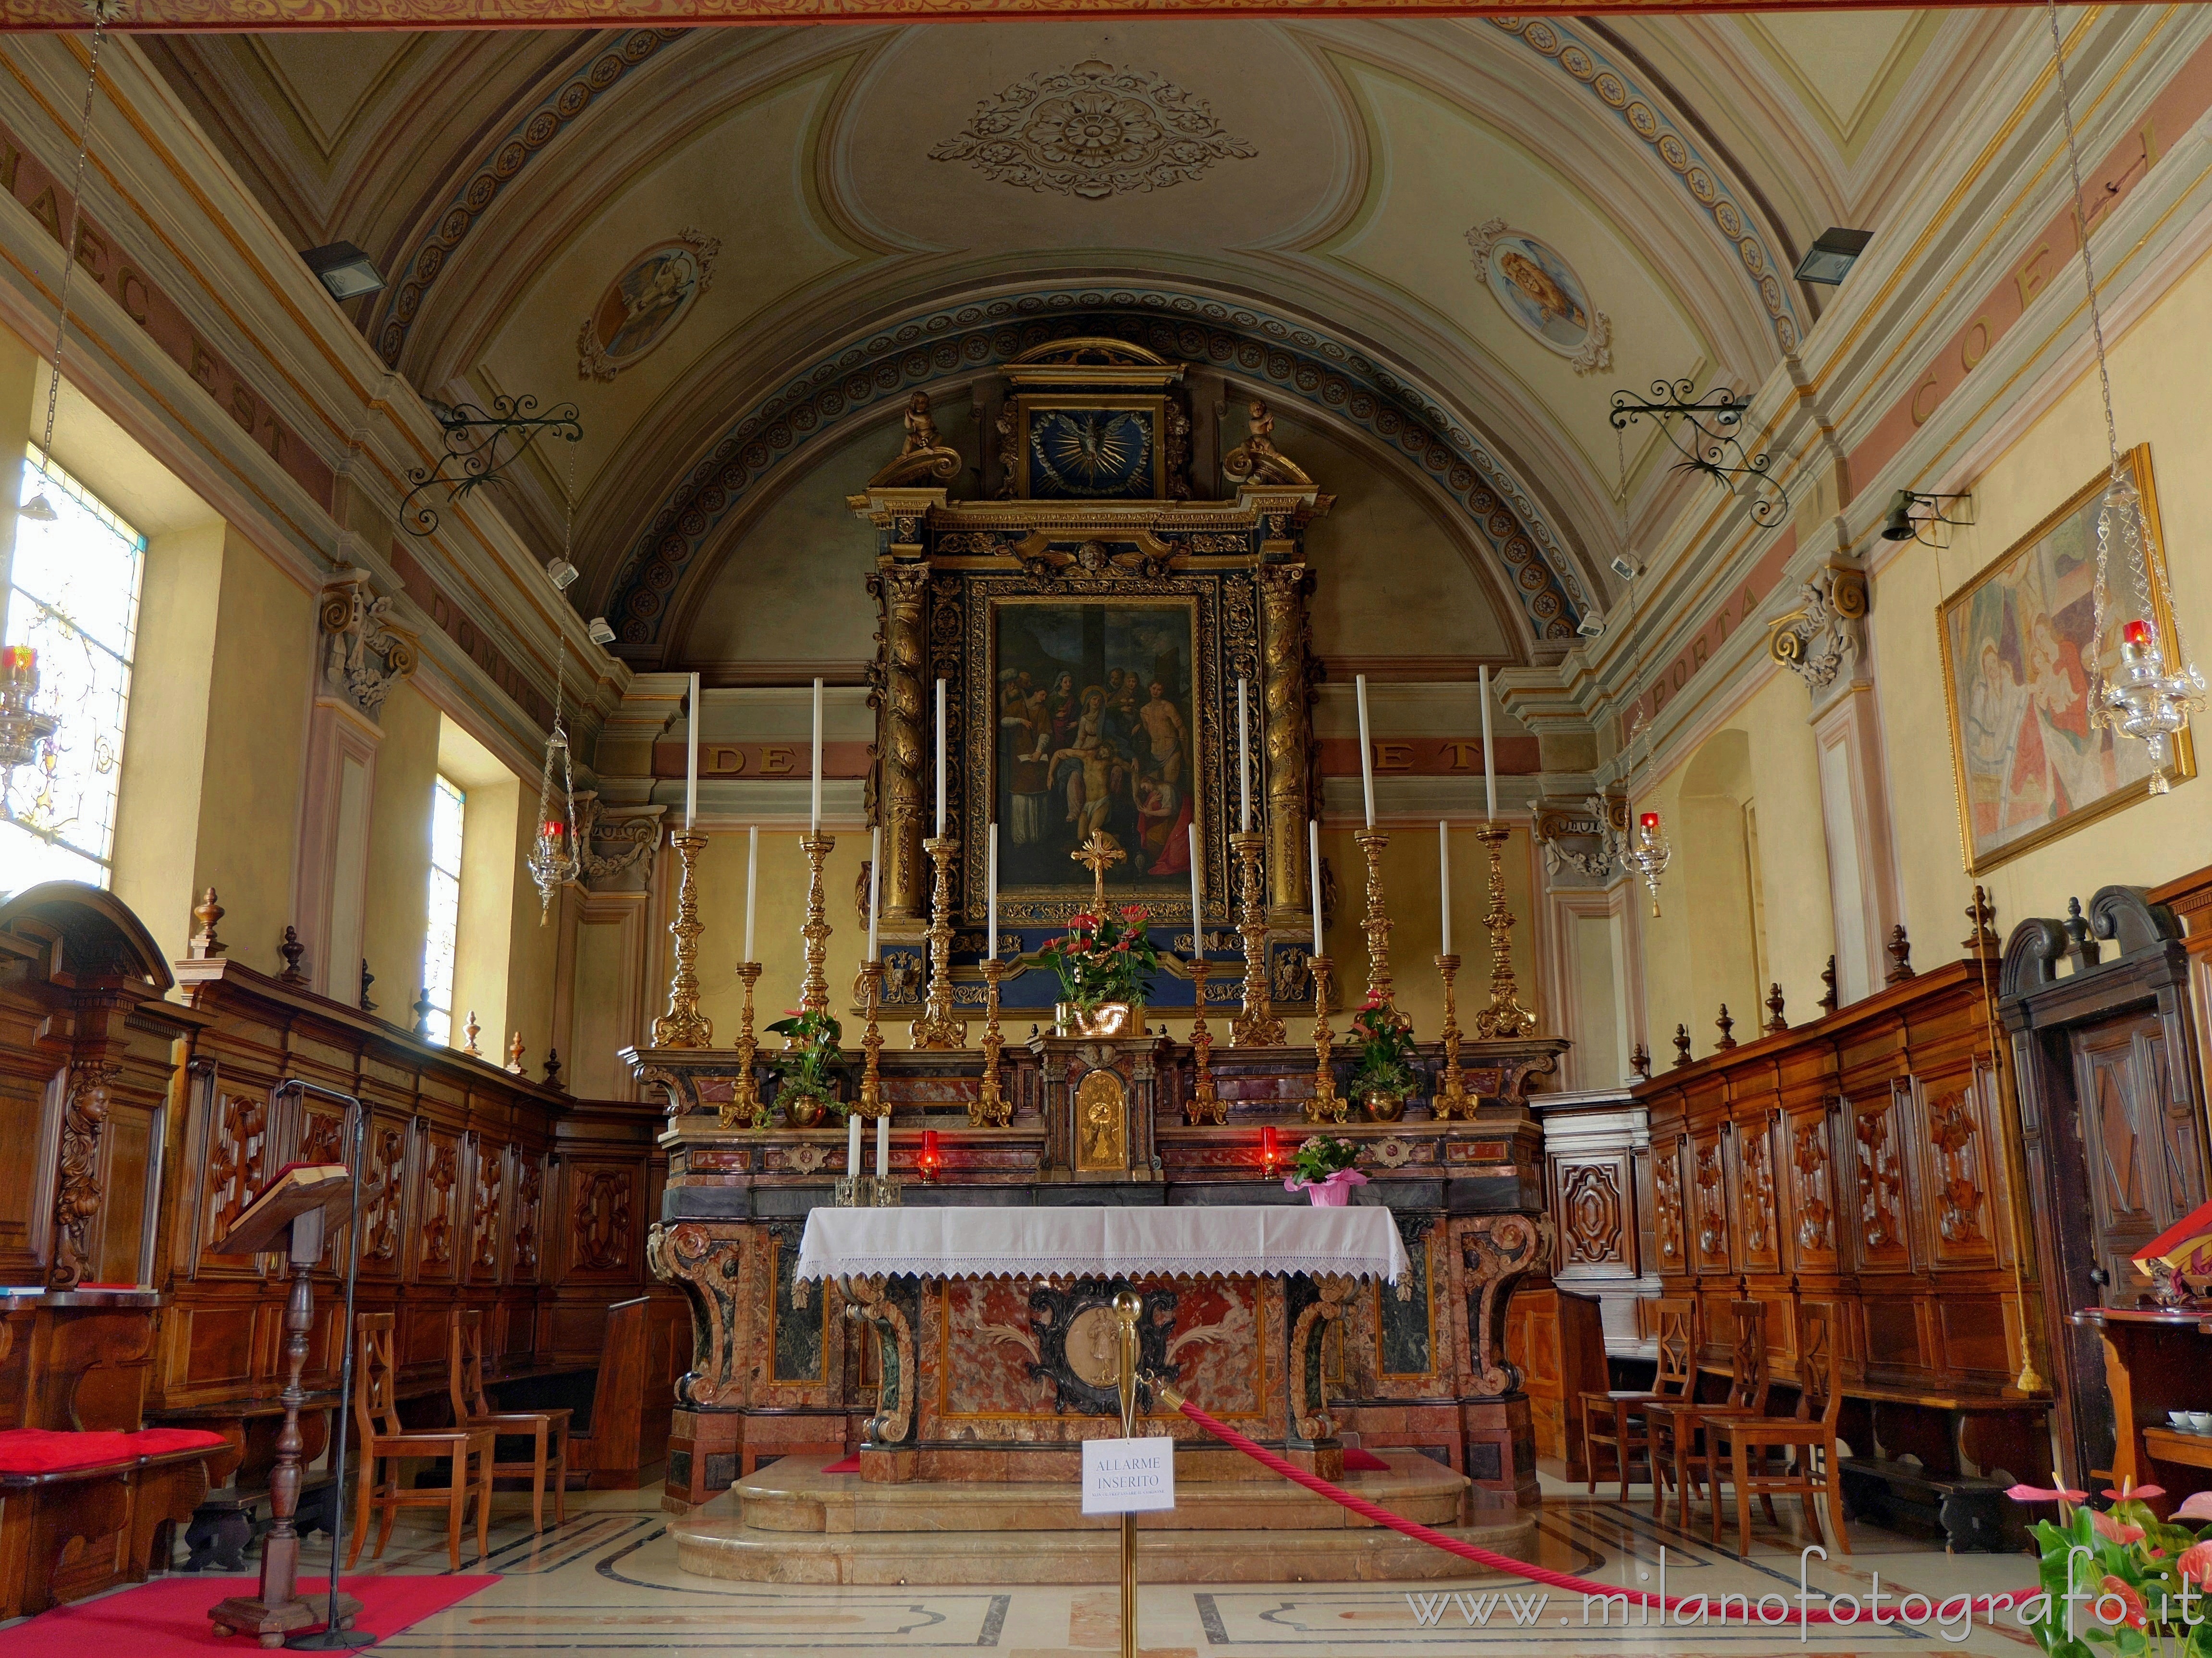 Ponderano (Biella, Italy): Presbytery of the Church of St. Lawrence Martyr - Ponderano (Biella, Italy)